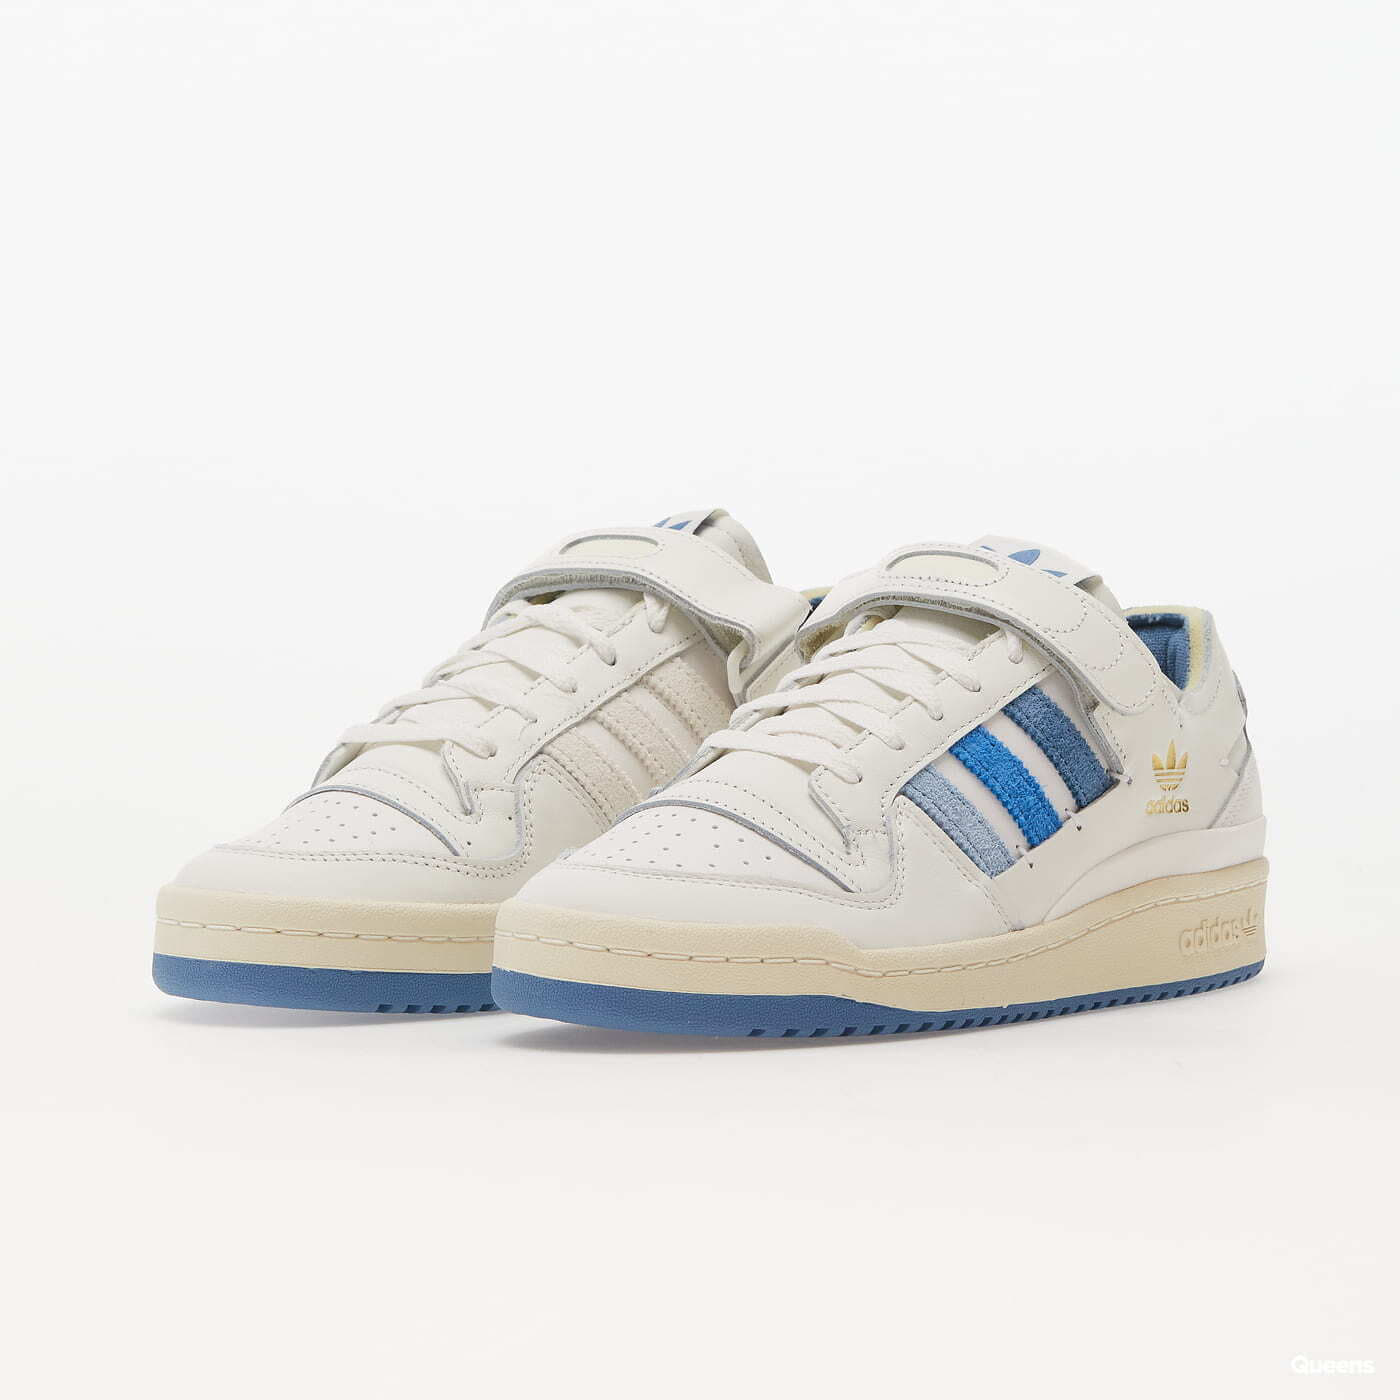 Adidași și pantofi pentru bărbați adidas Originals Forum 84 Low cloud white/ alter navy/ pul blue